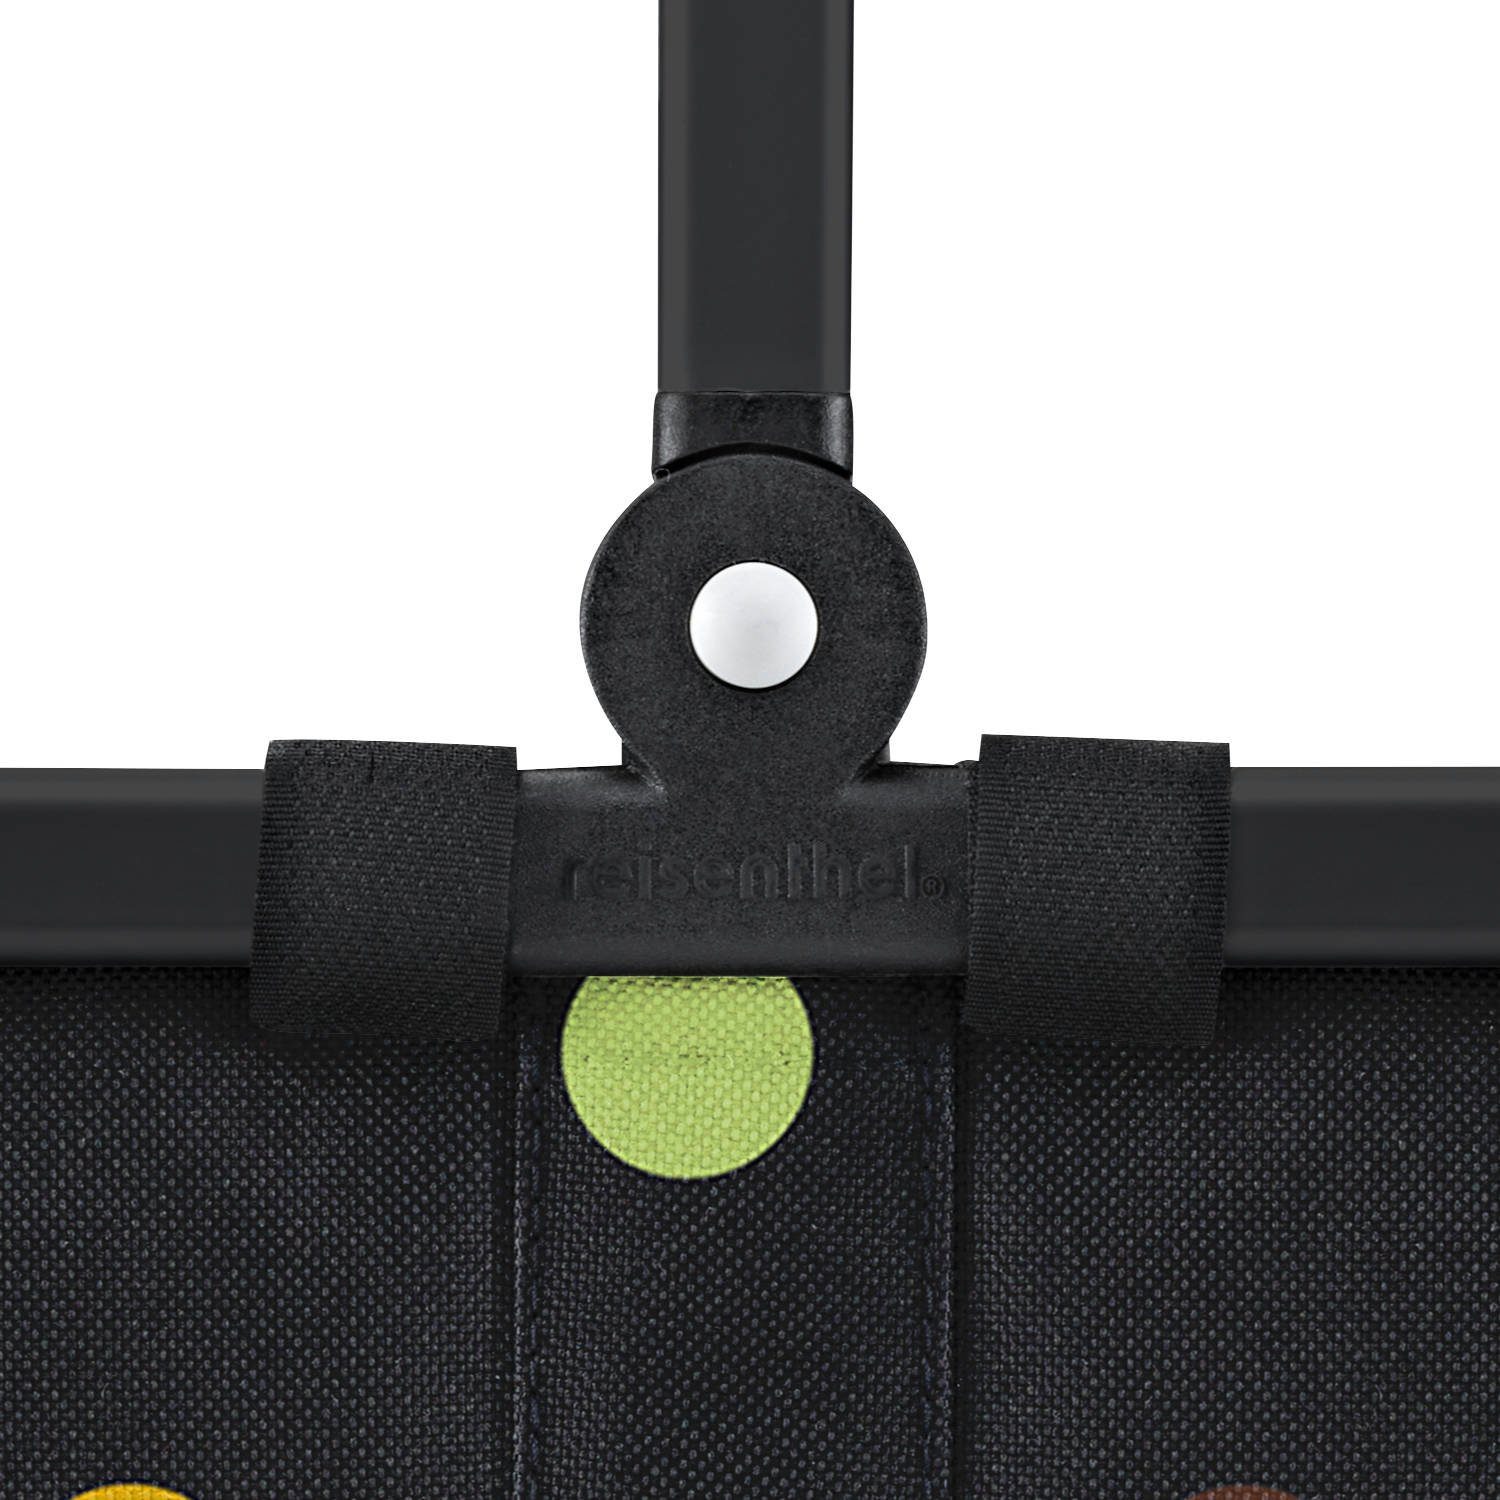 - Einkaufskorb frame Reisenthel Farbauswahl, XS REISENTHEL® Korb carrybag XS dots